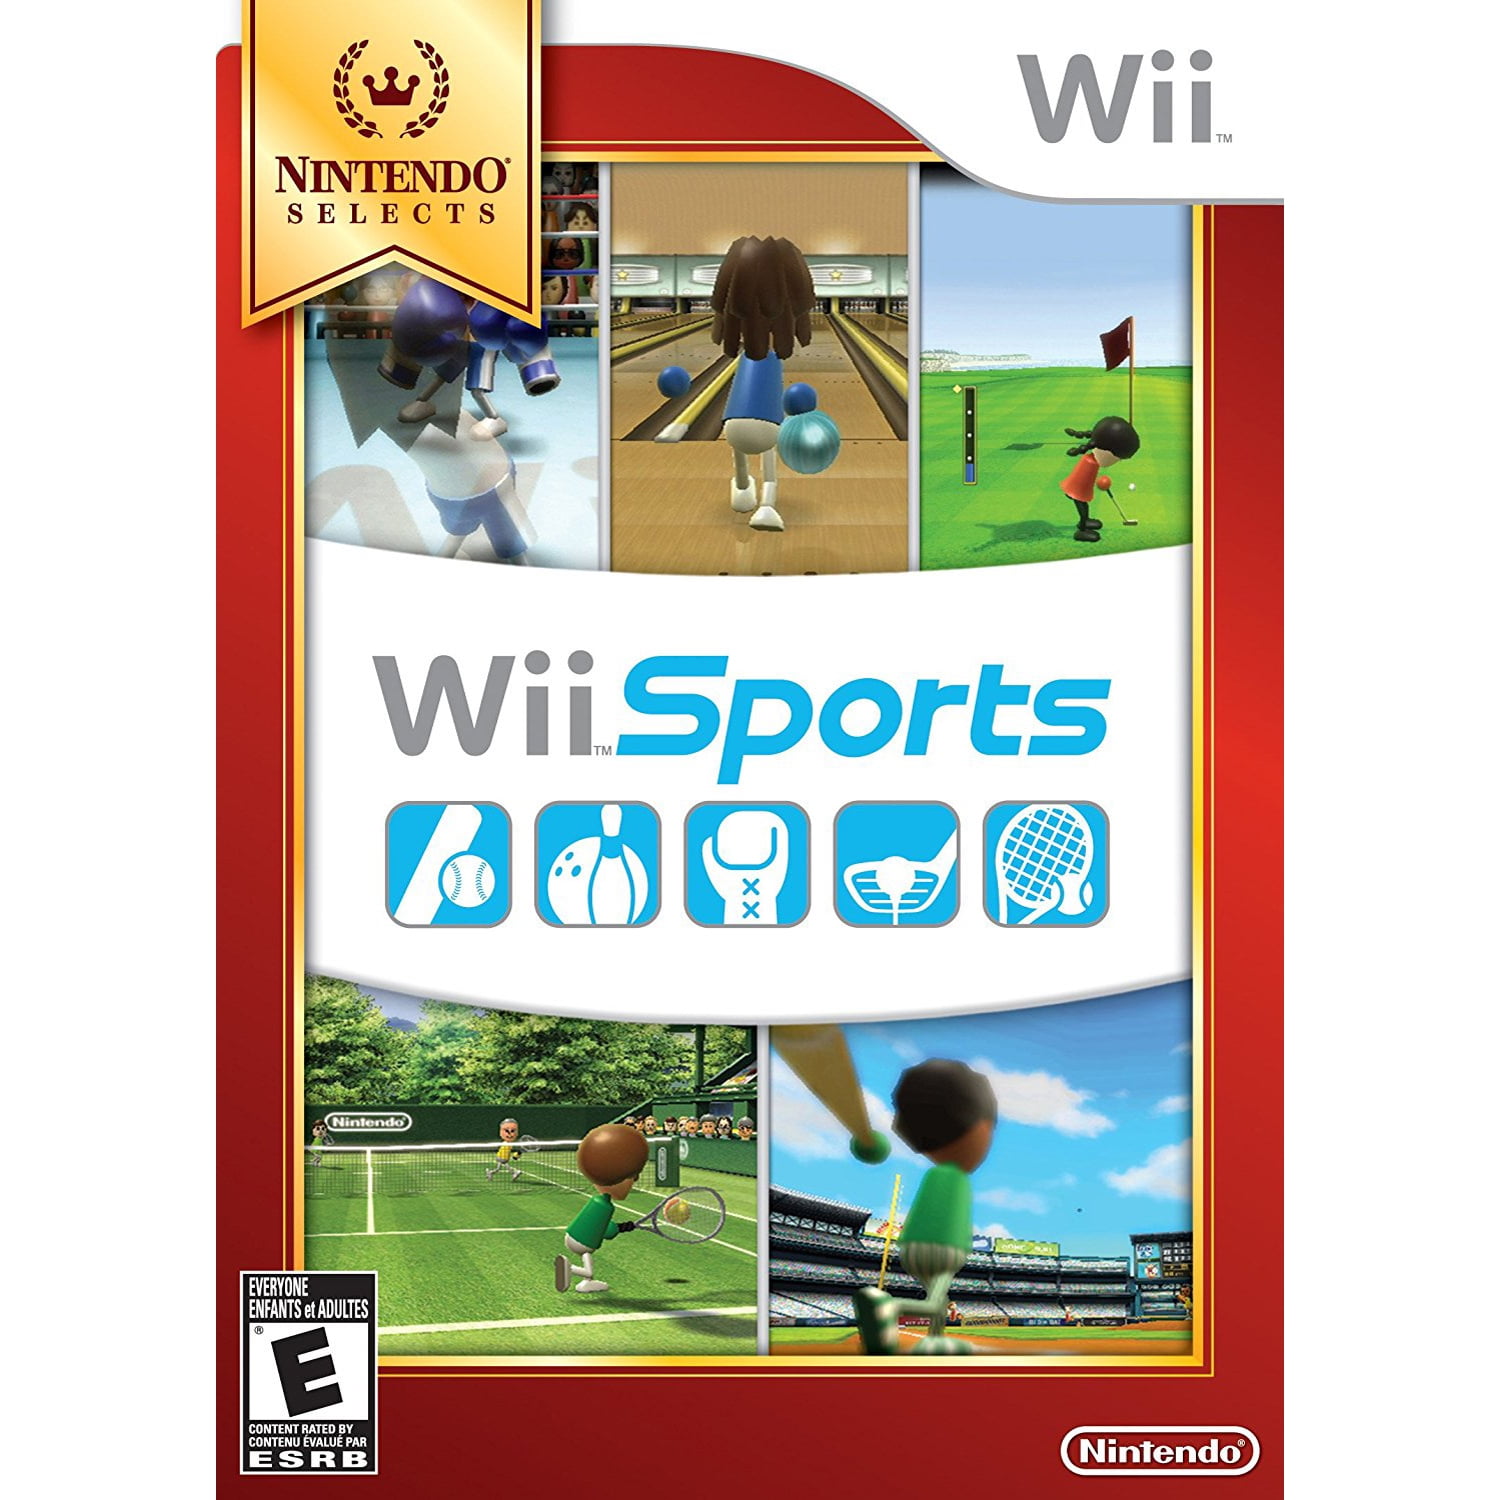 Wii Sports ClubBaseball/Wii Sports ClubBoxing, Nintendo, Nintendo Wii